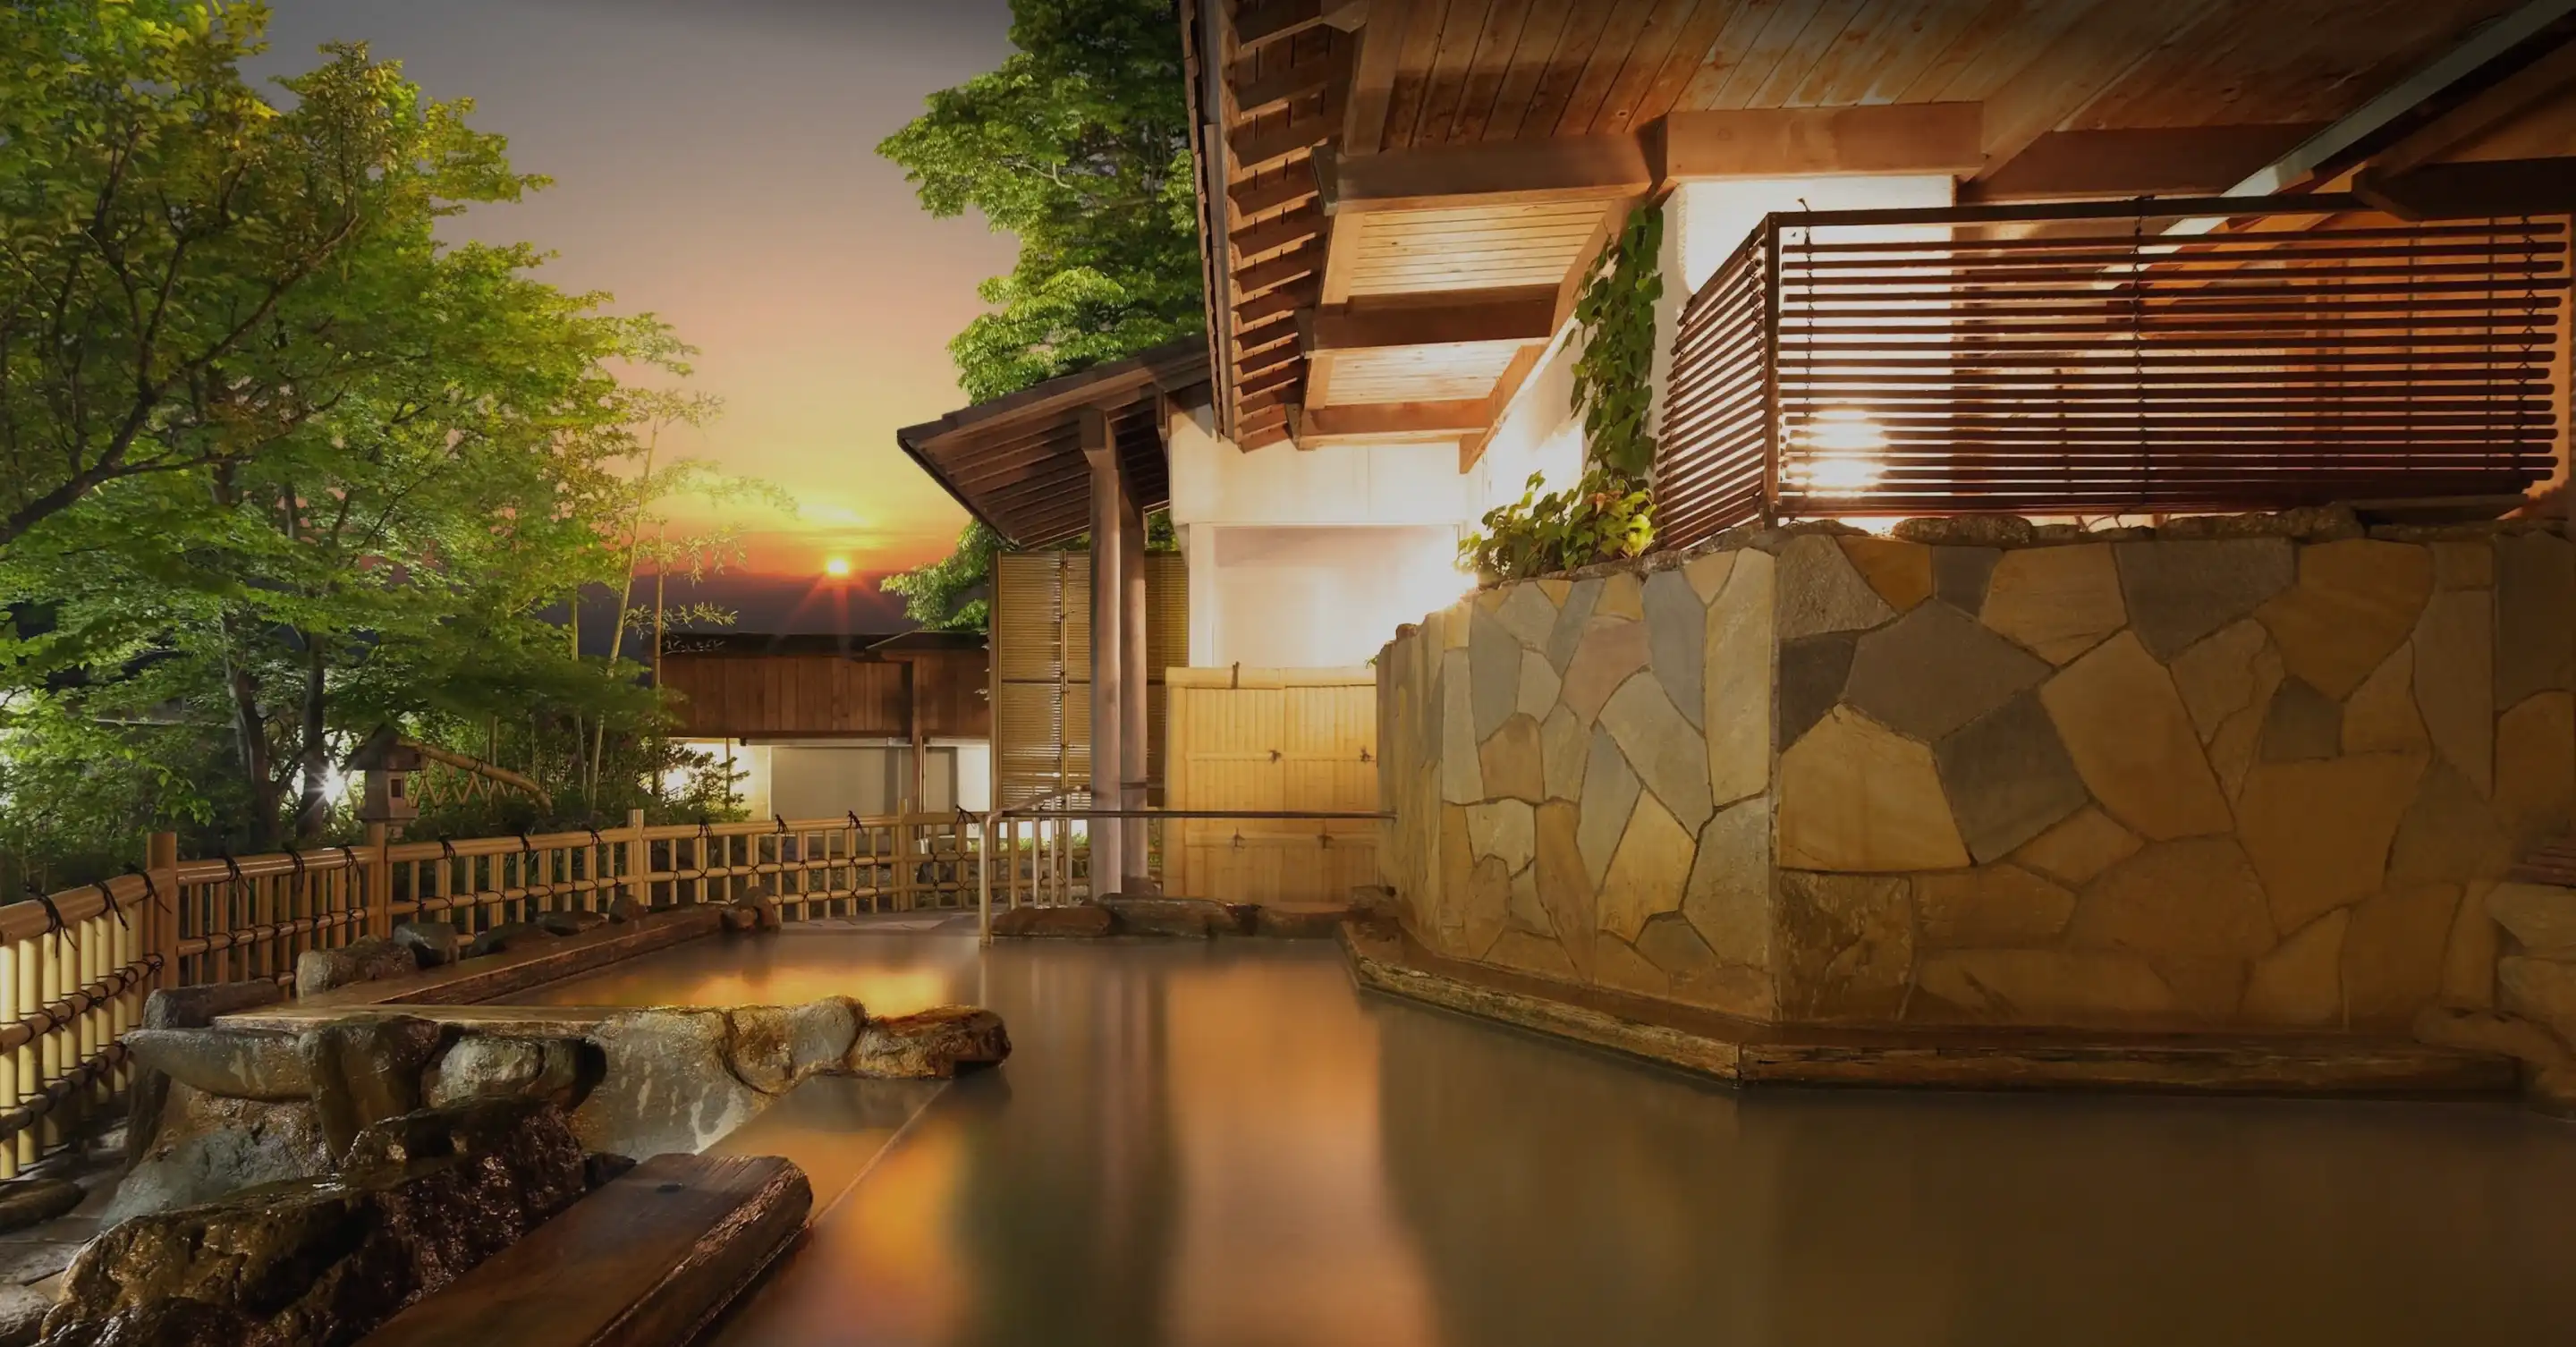 image:Open-air bath Ujono-yu